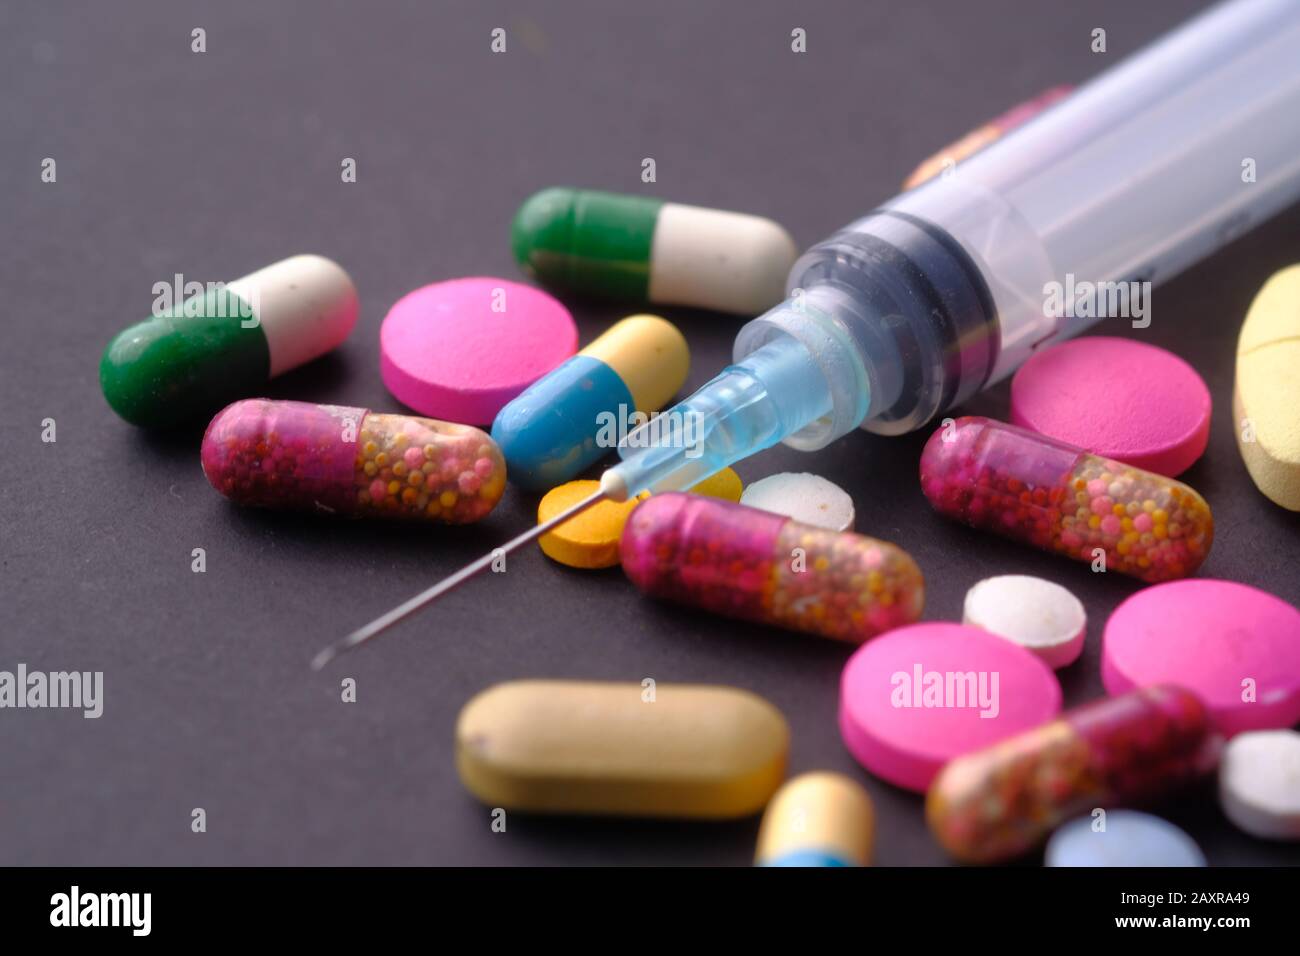 syringe and pills on table, drug abuse  Stock Photo